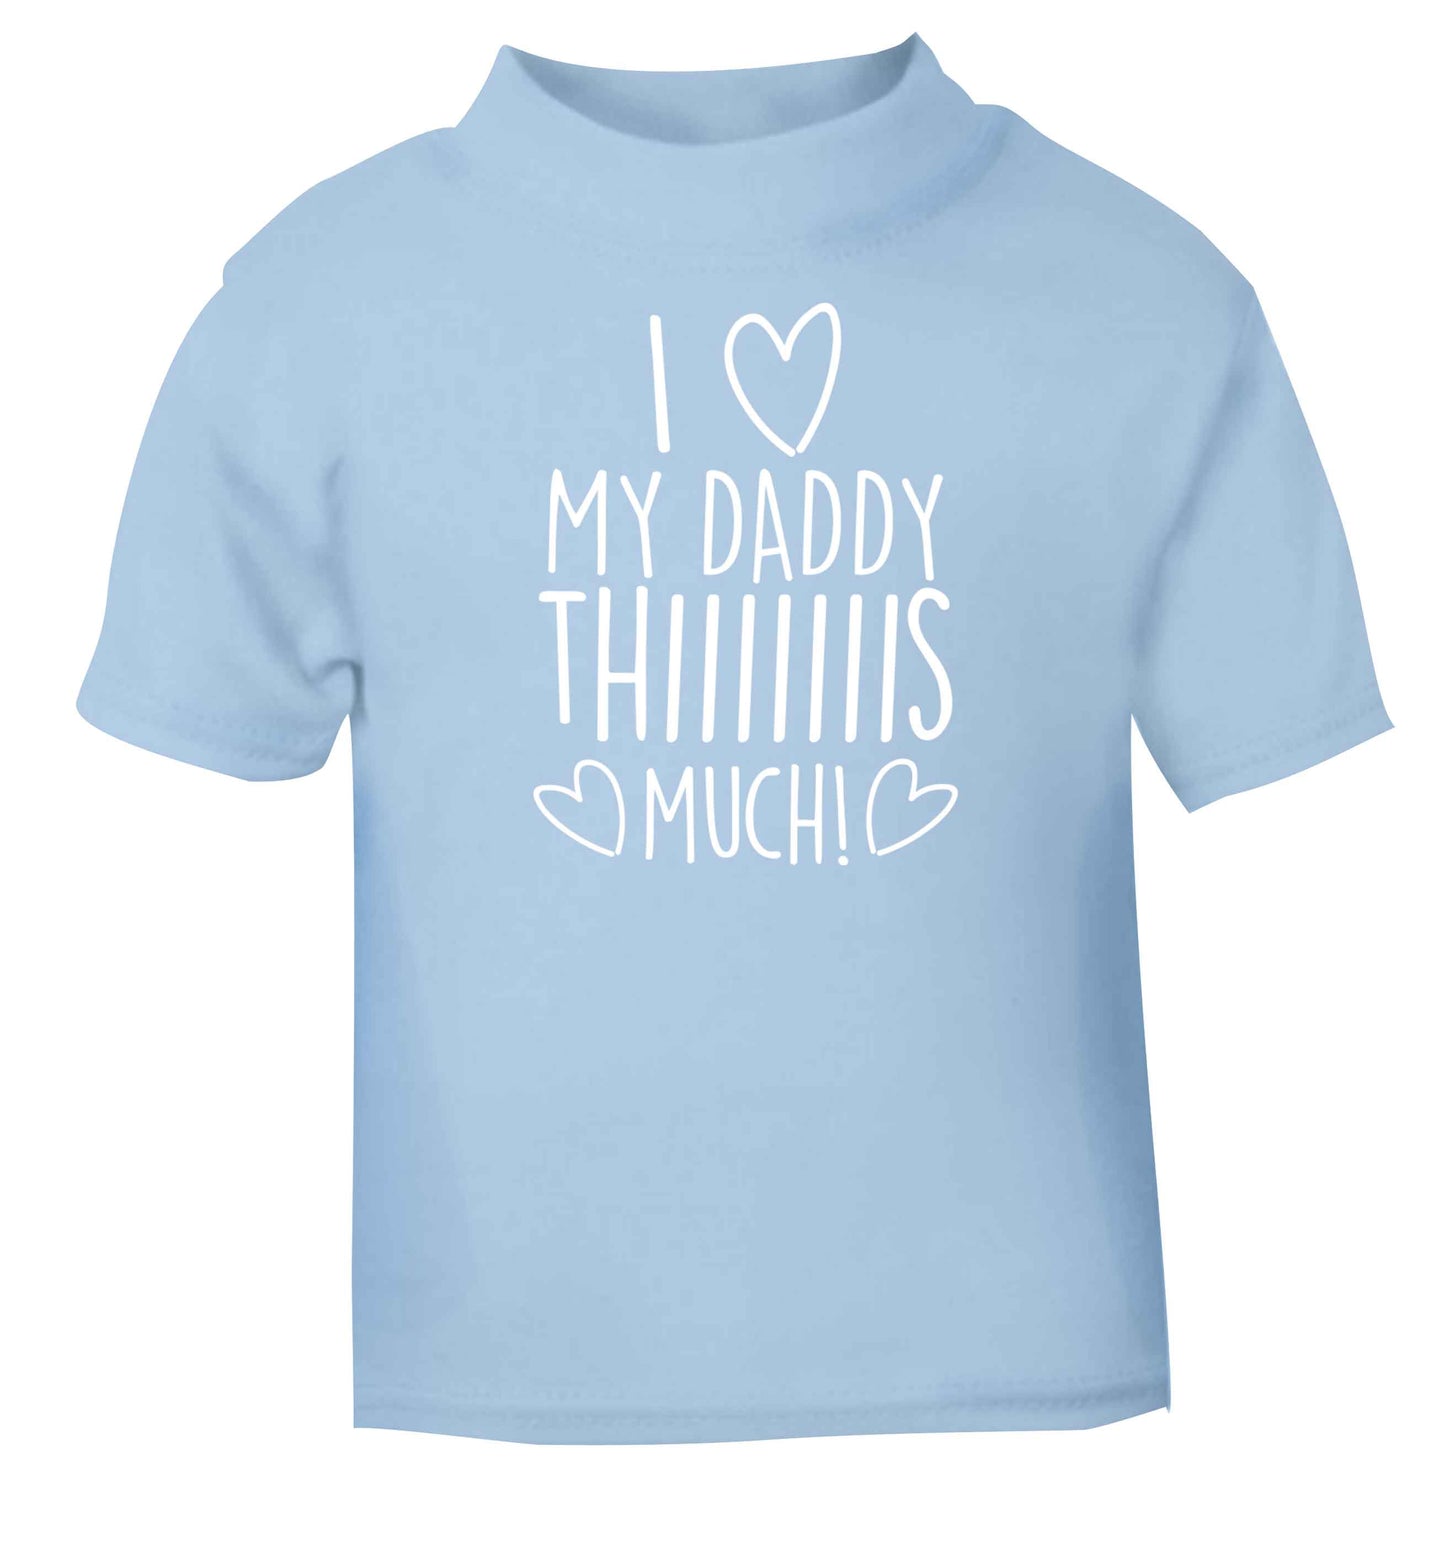 I love my daddy thiiiiis much! light blue baby toddler Tshirt 2 Years